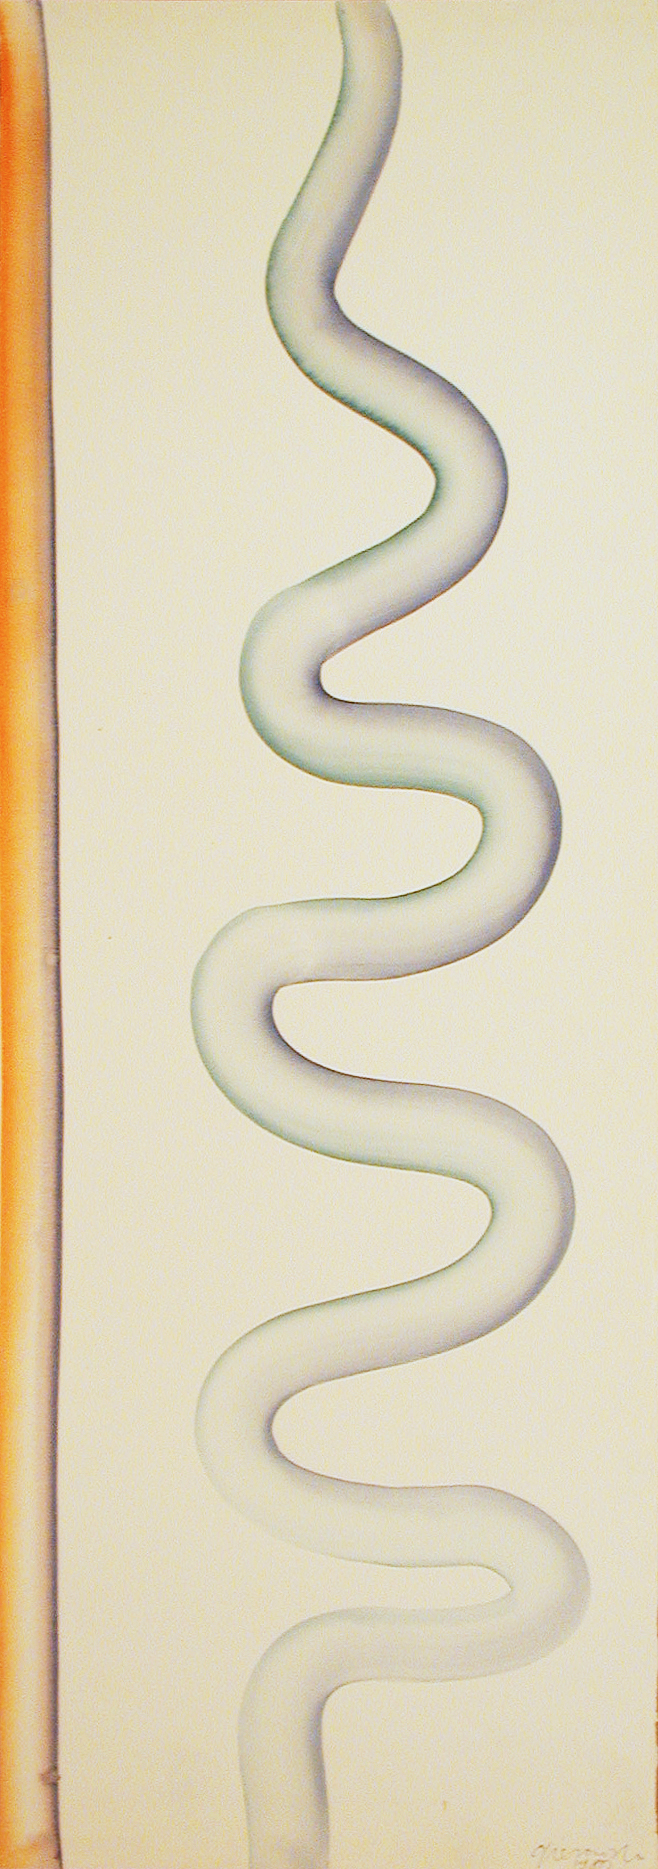 Stefan Gierowski – Bez tytułu – akwarela, papier, 76 x 26 cm, 1980